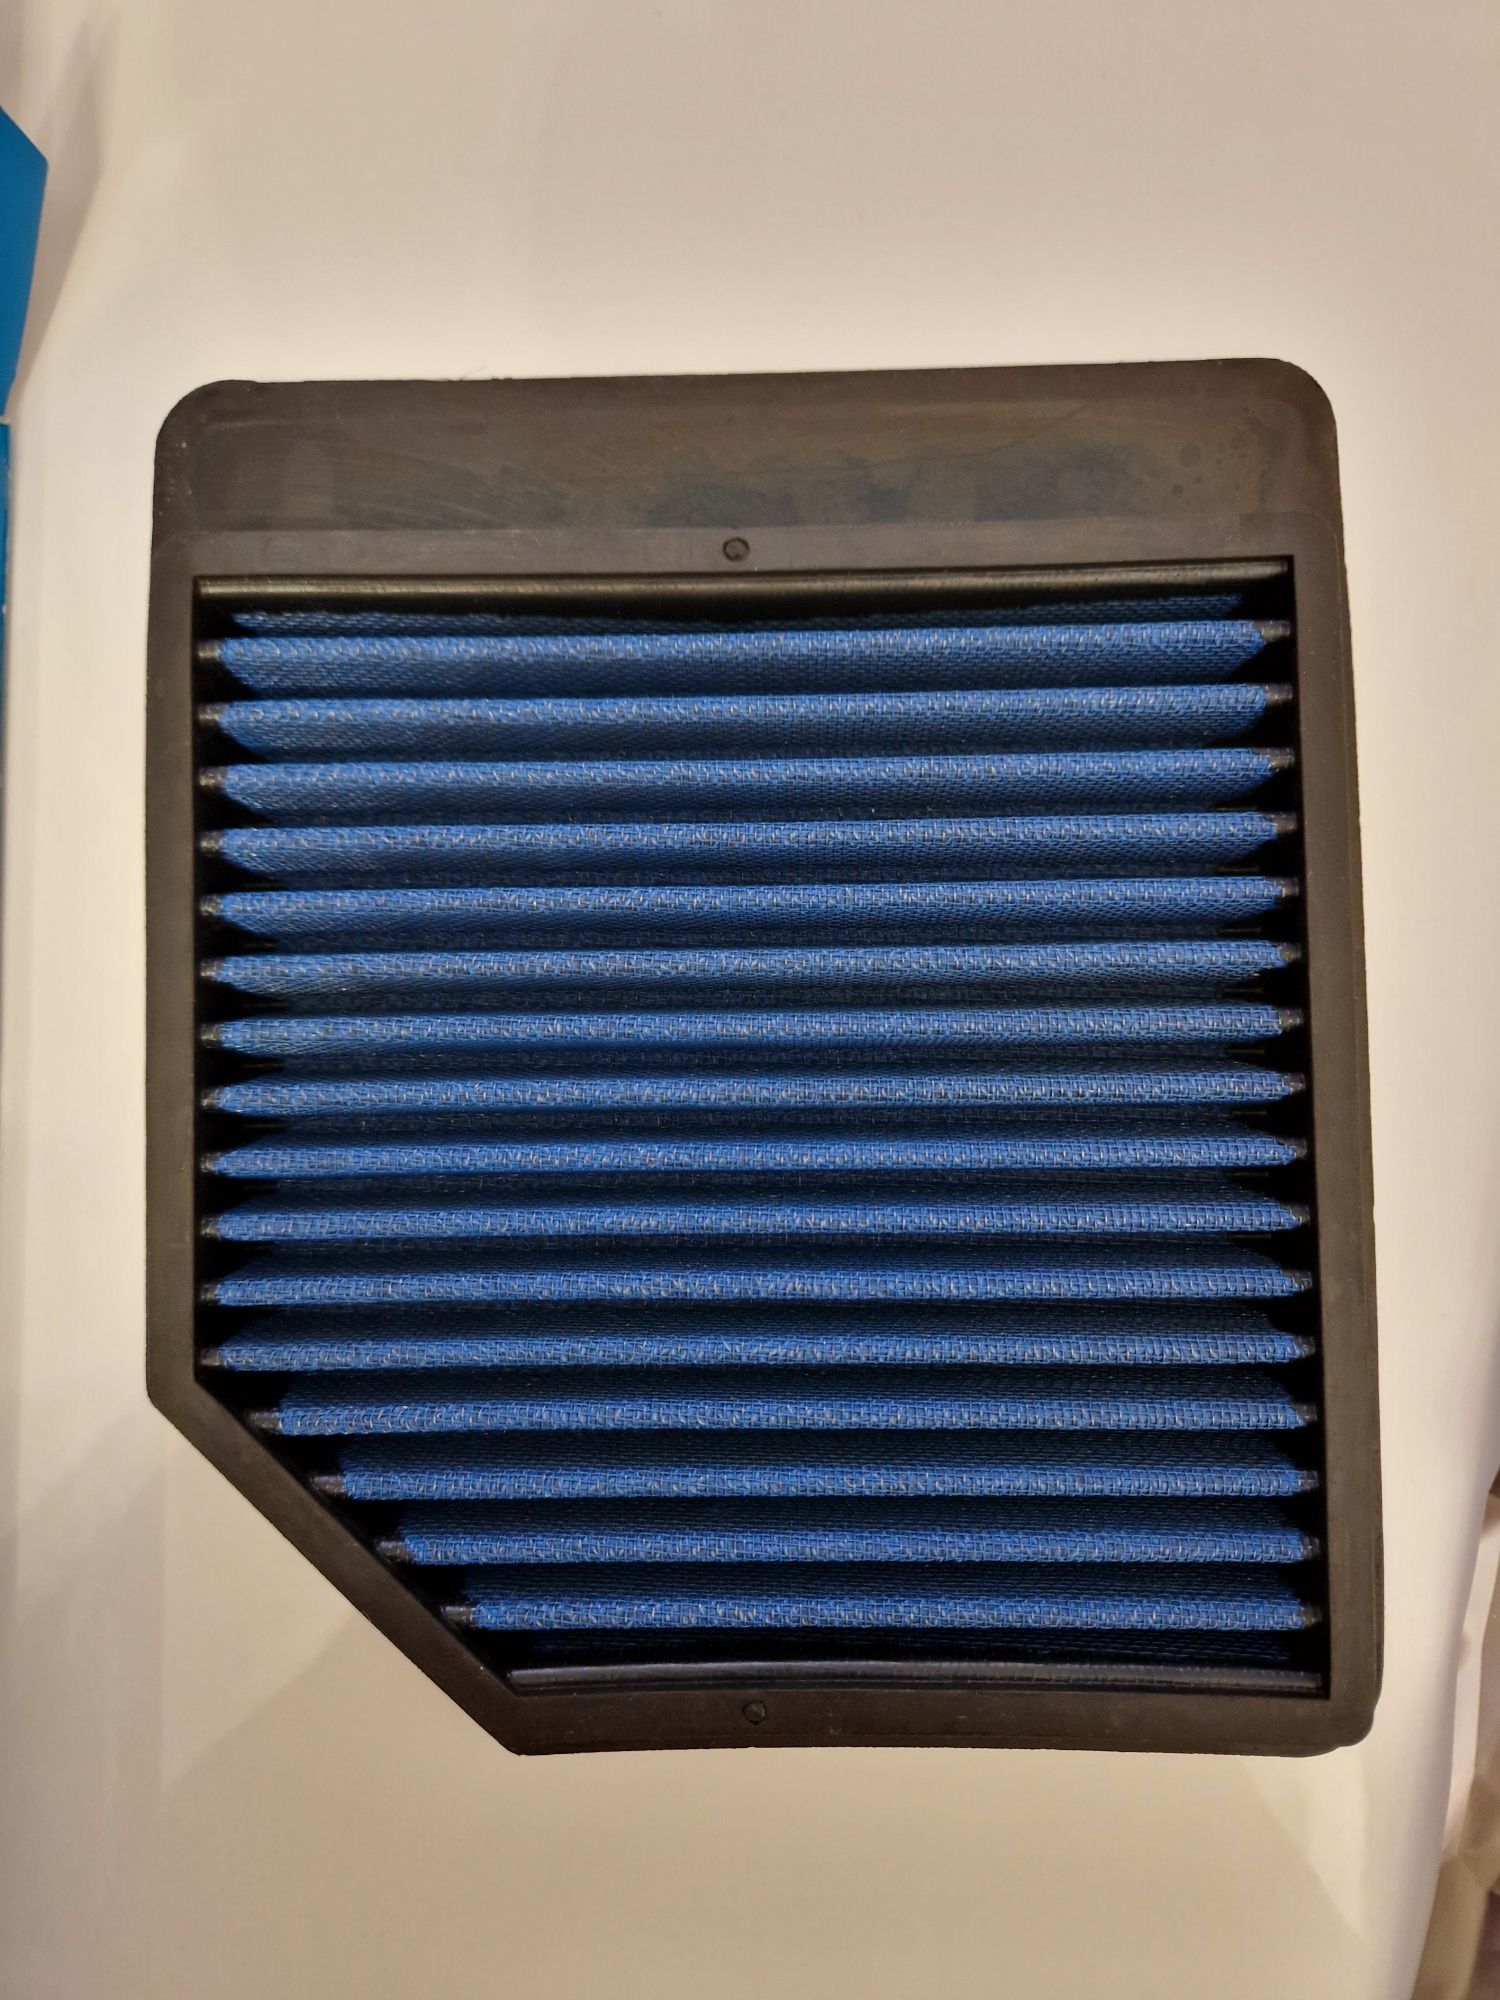 Wkładka filtru powietrza Simota Honda Civic 1.8 r18a2 viii Ufo